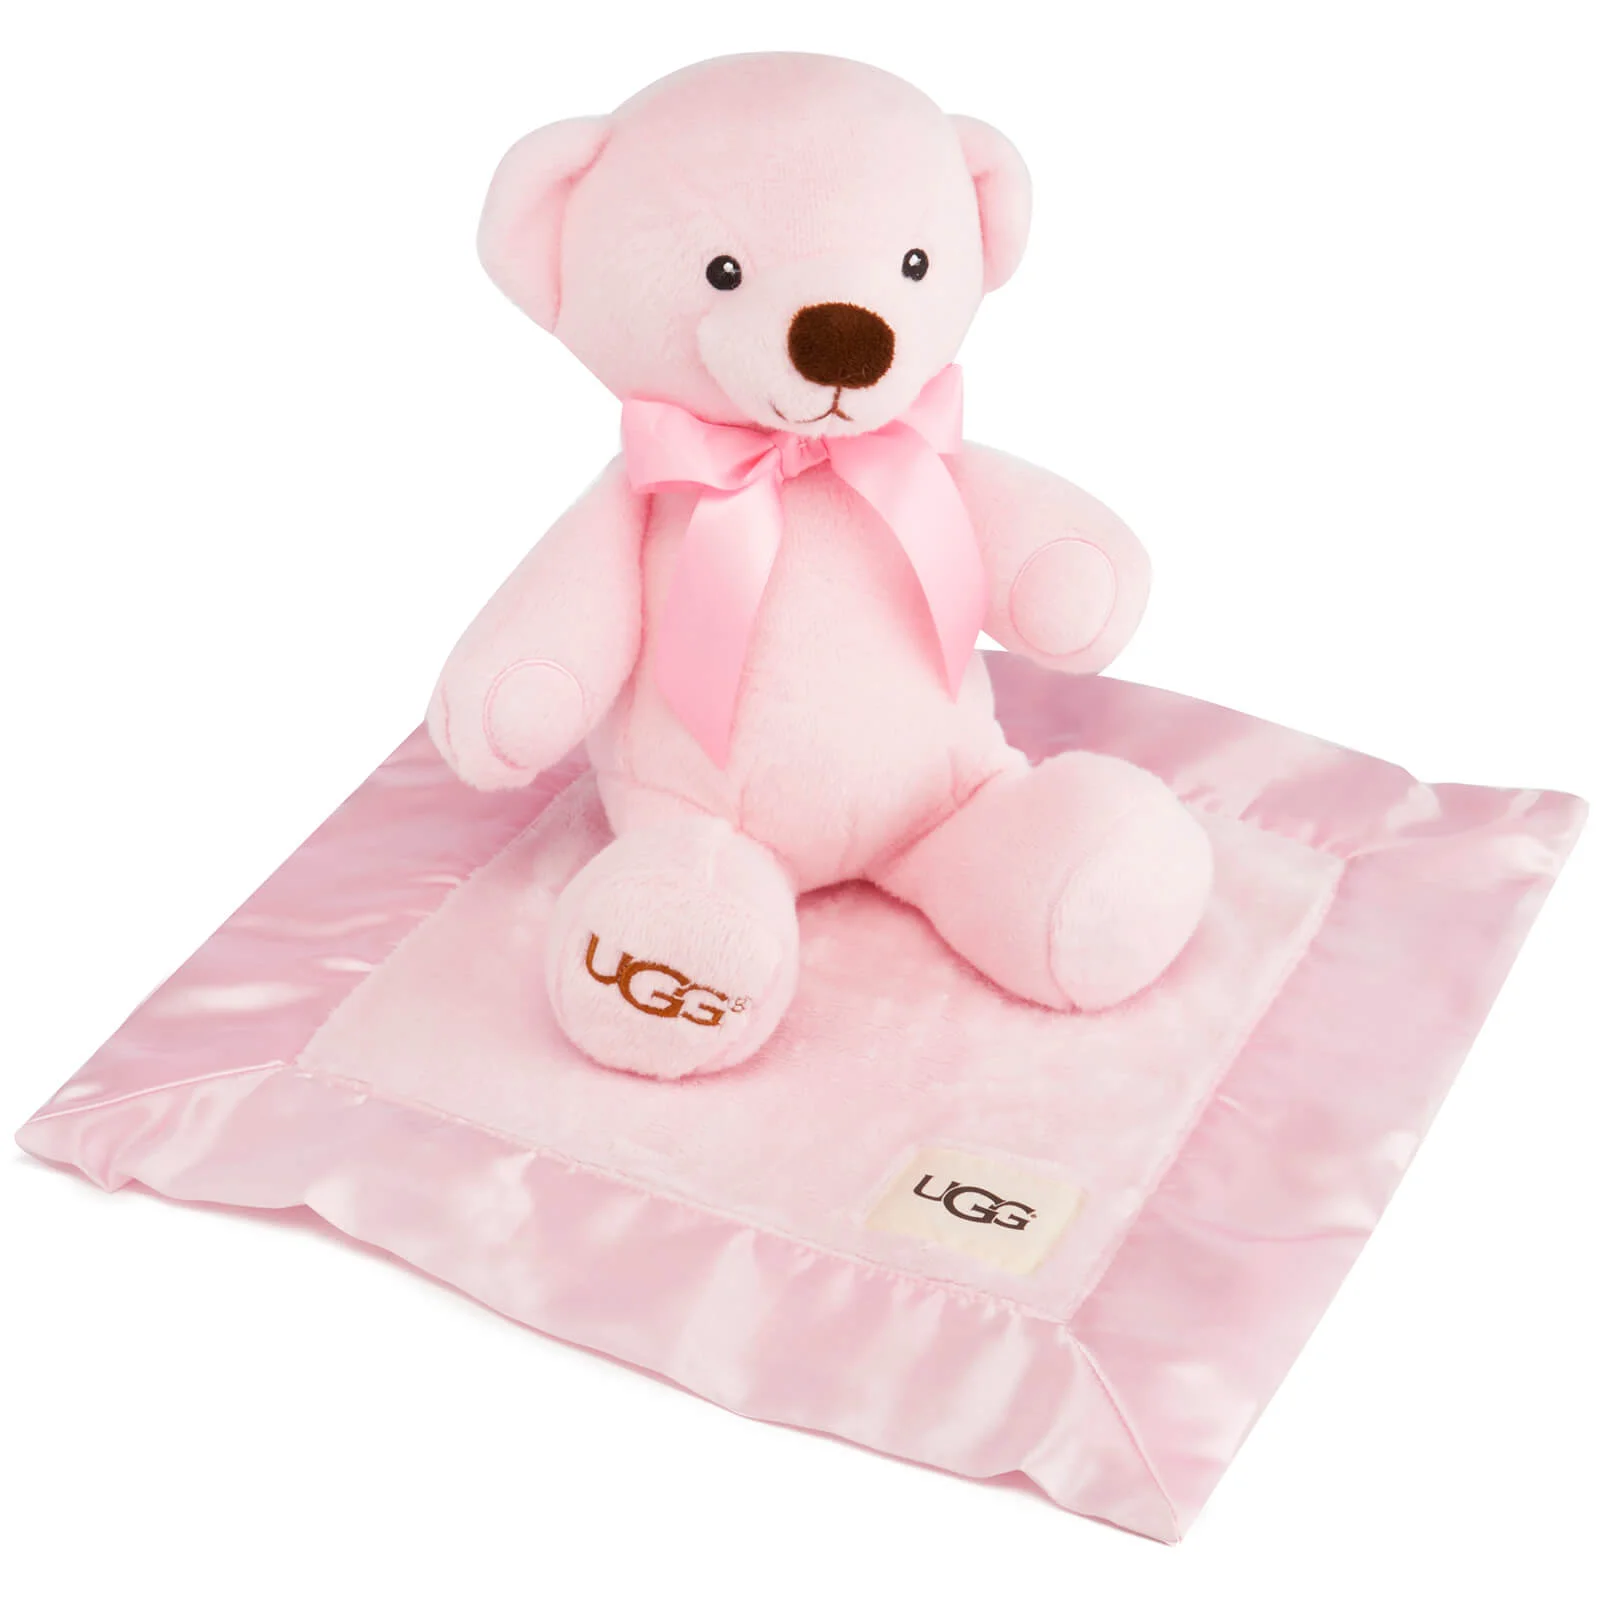 UGG Babies' Snuggle Gift Set - Baby Pink Image 1